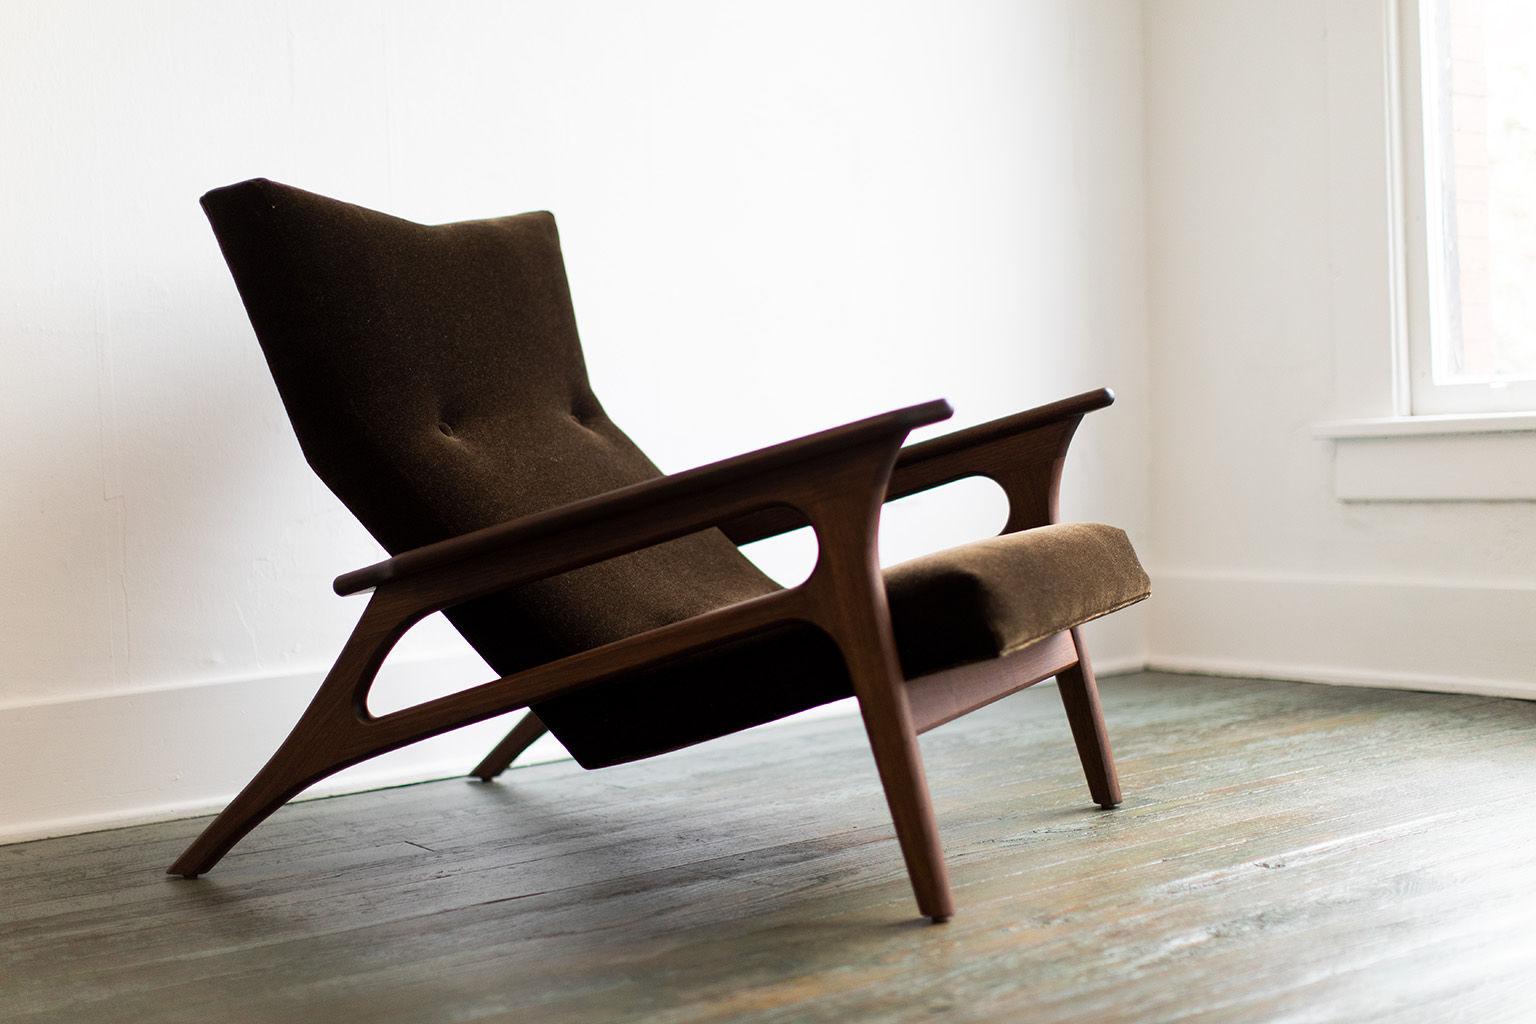 Craft Associates Modern Lounge Chair, 2002, the Parallax For Sale 1